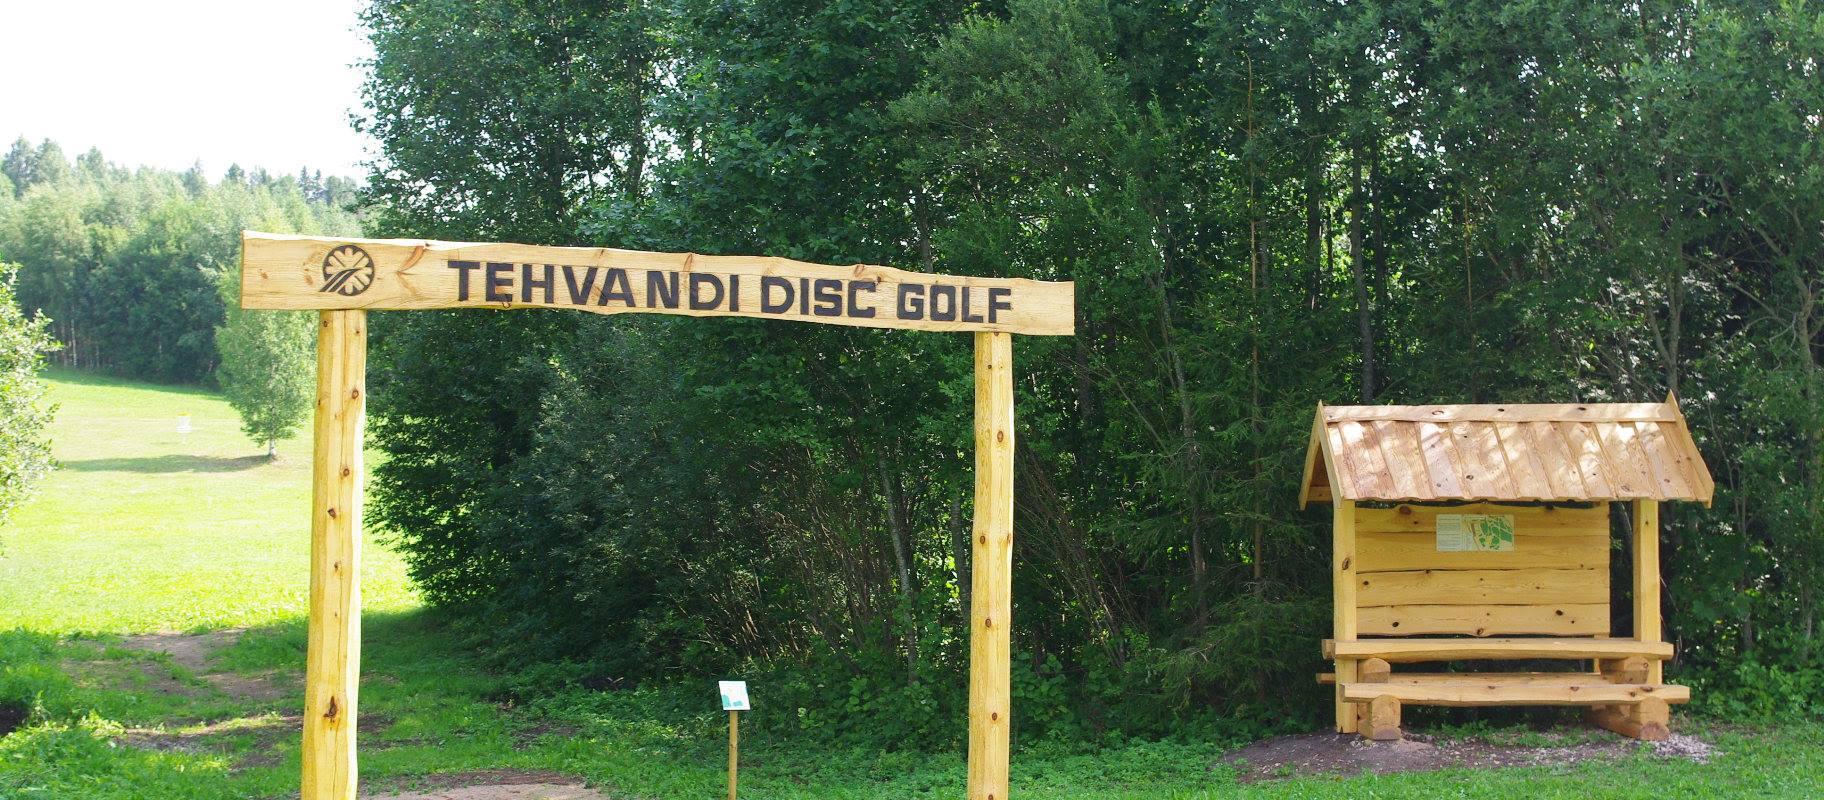 Tehvandi disc golf park